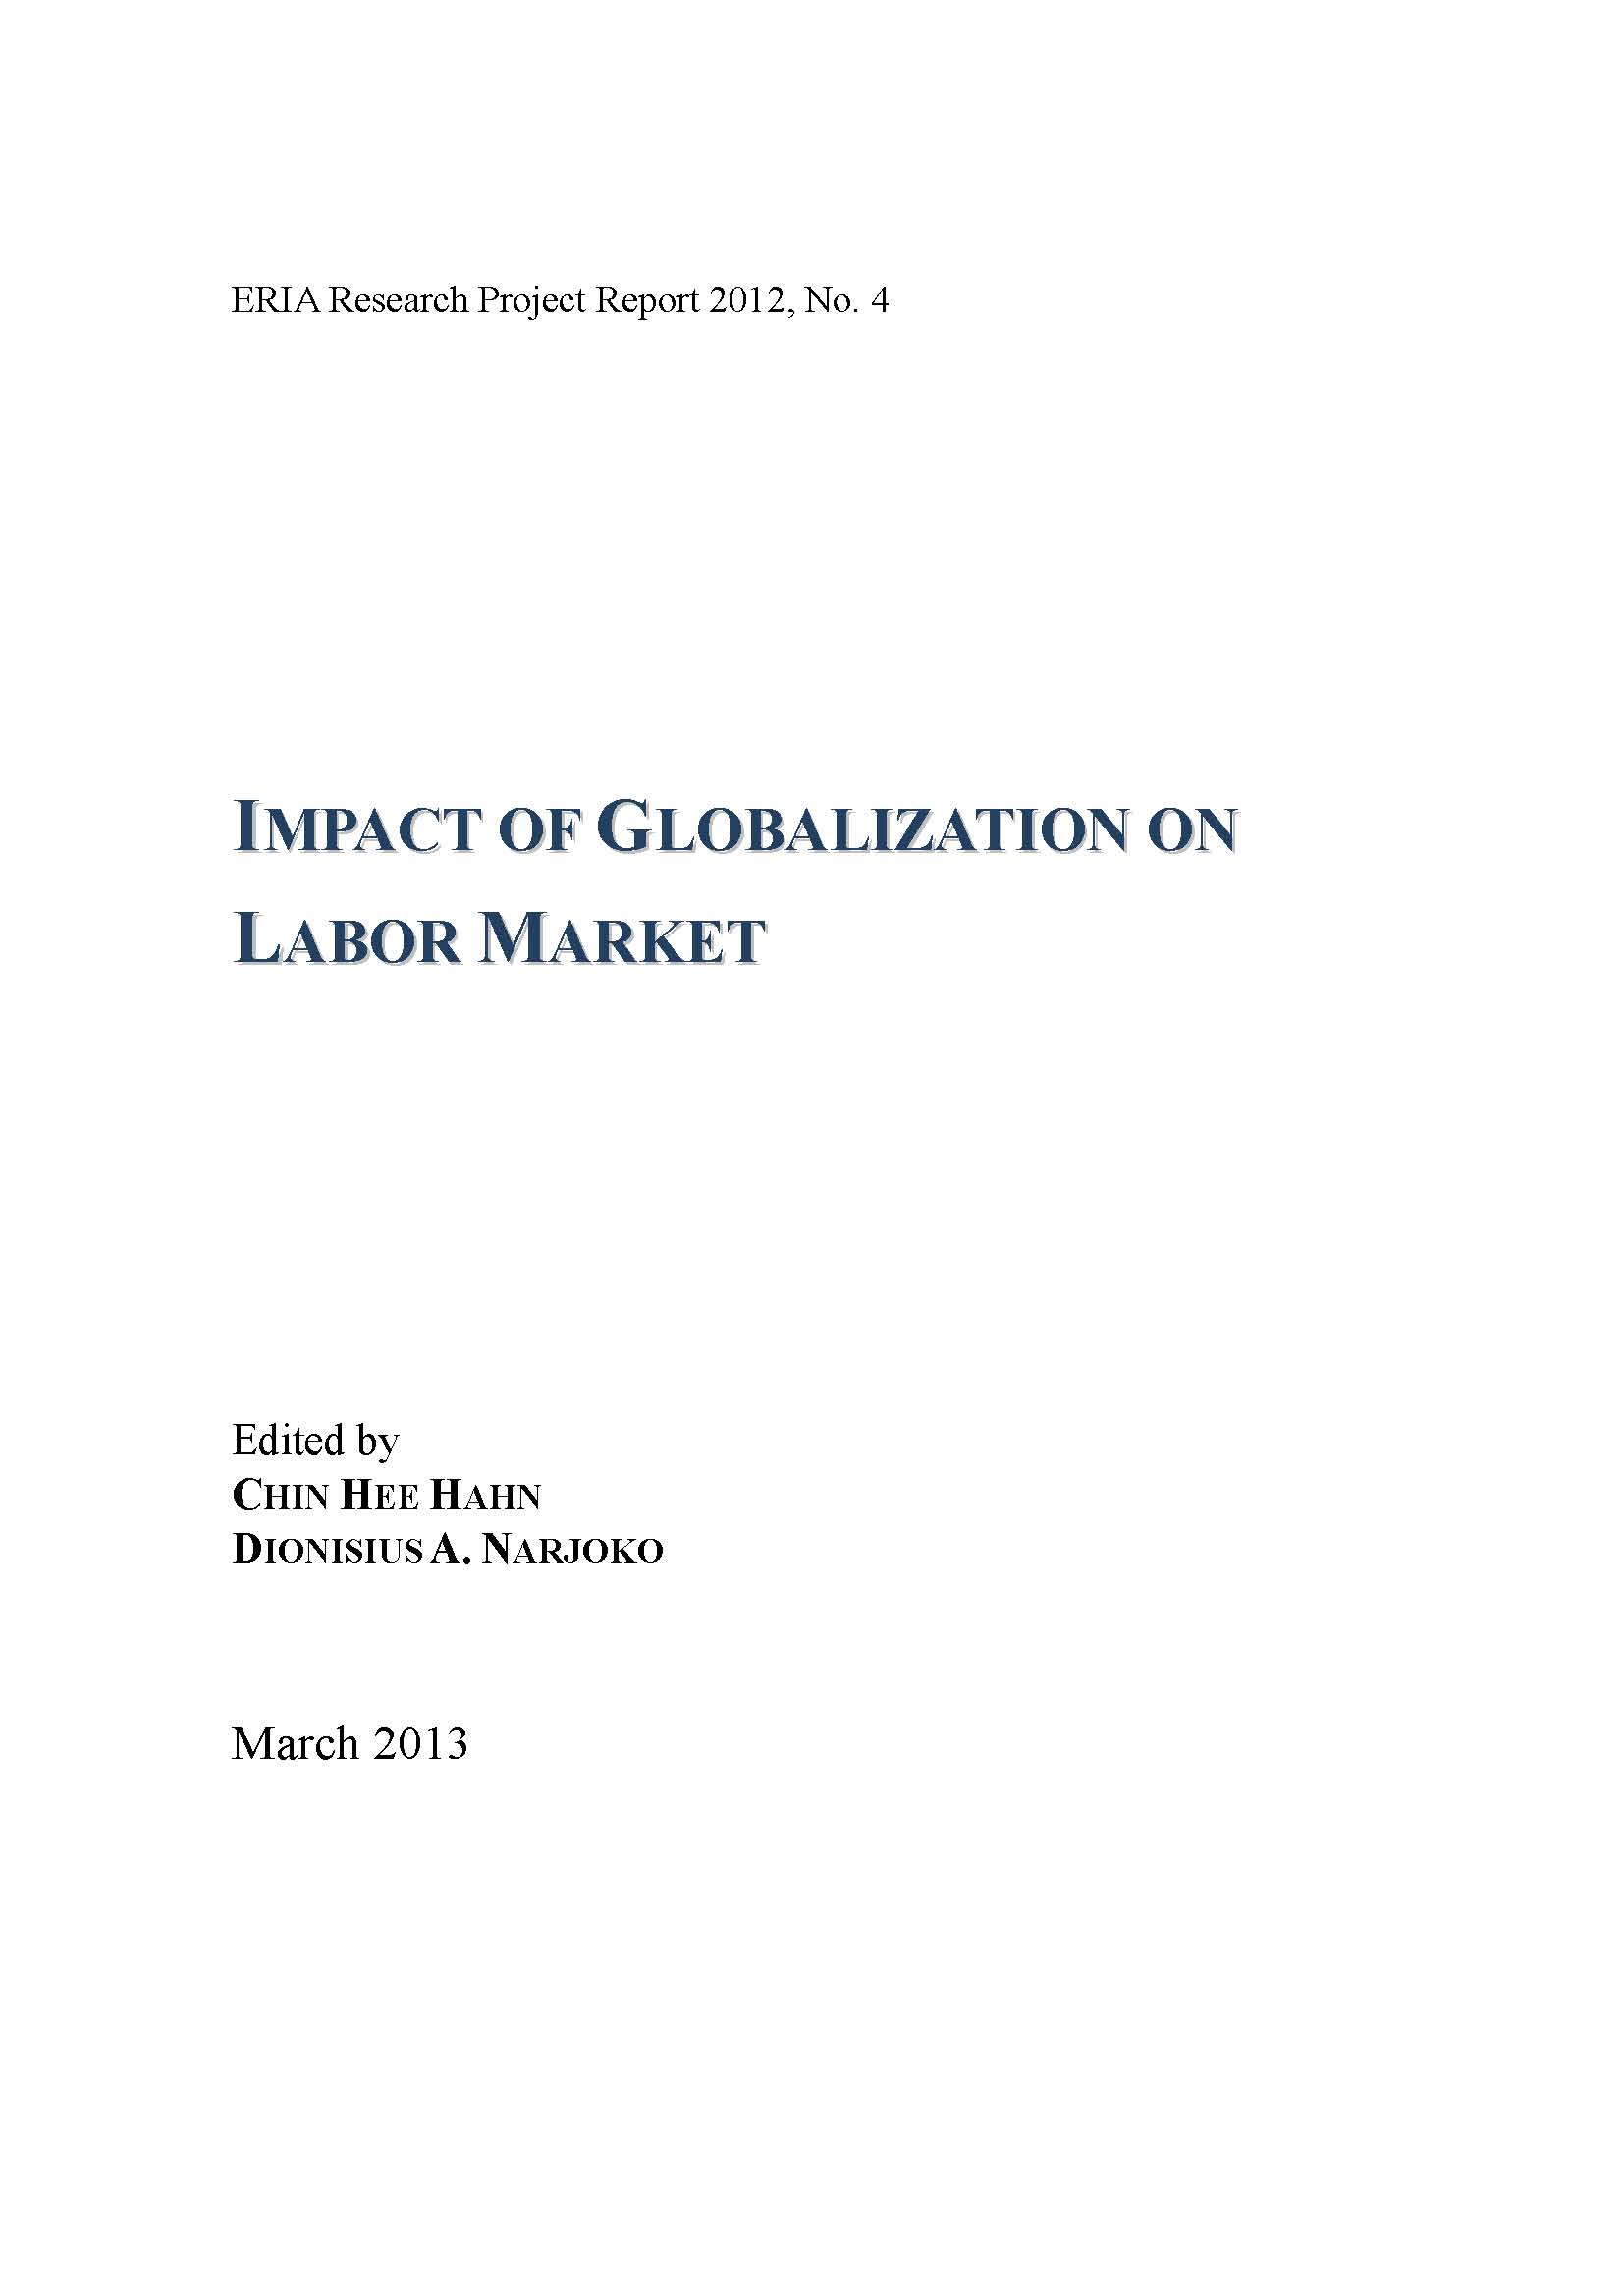 Impact of Globalization on Labor Market